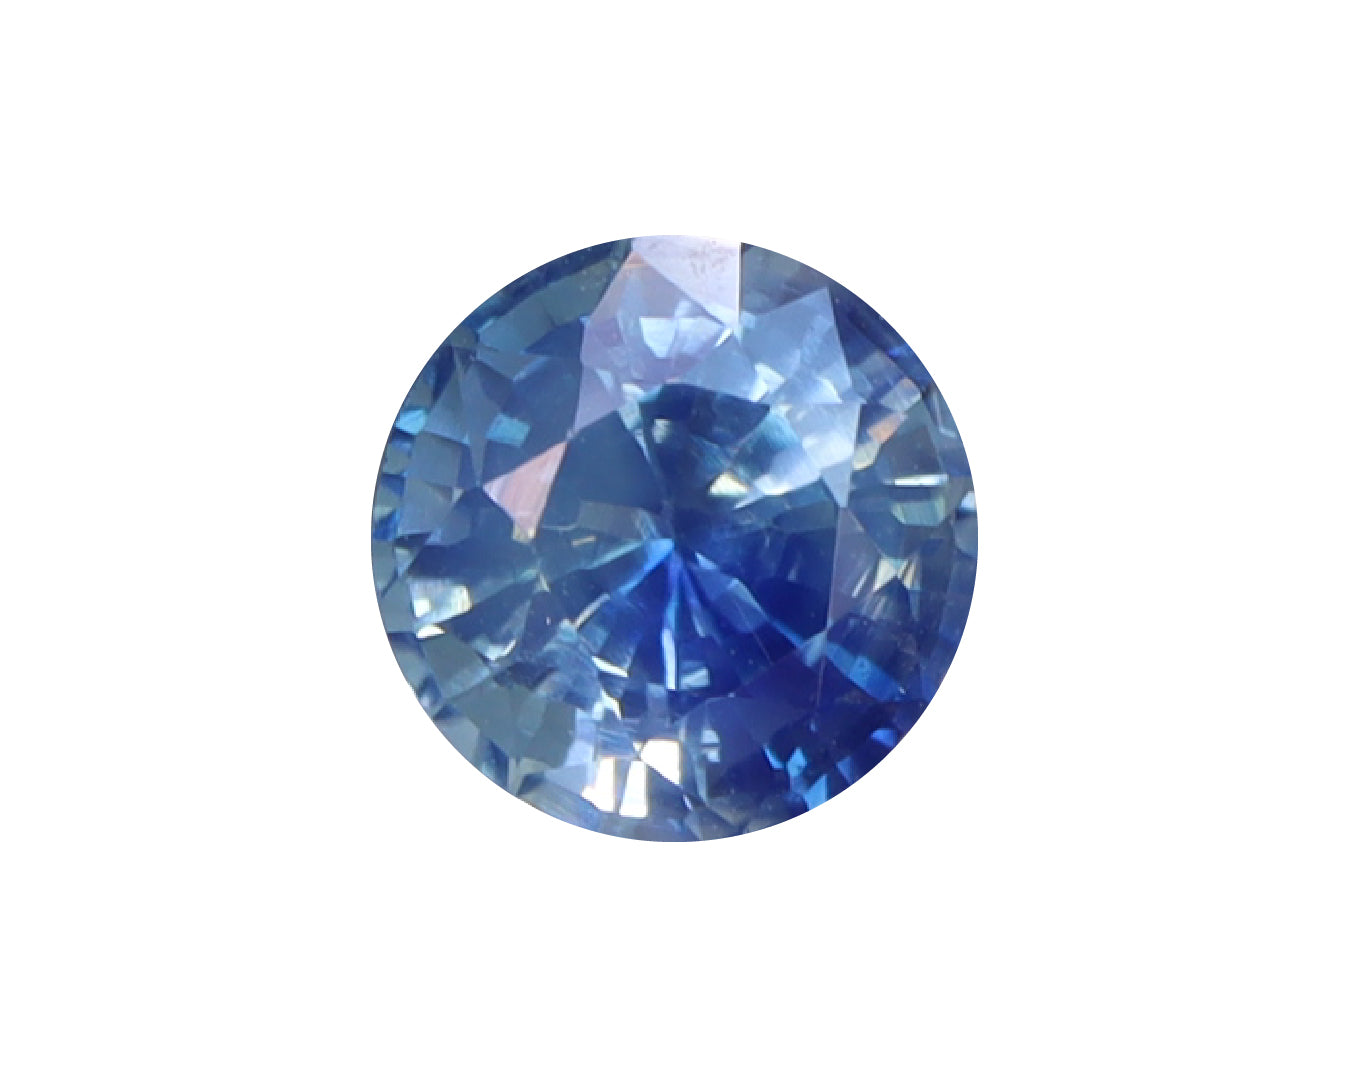 Piedra Zafiro Azul 0.66cts S-1538